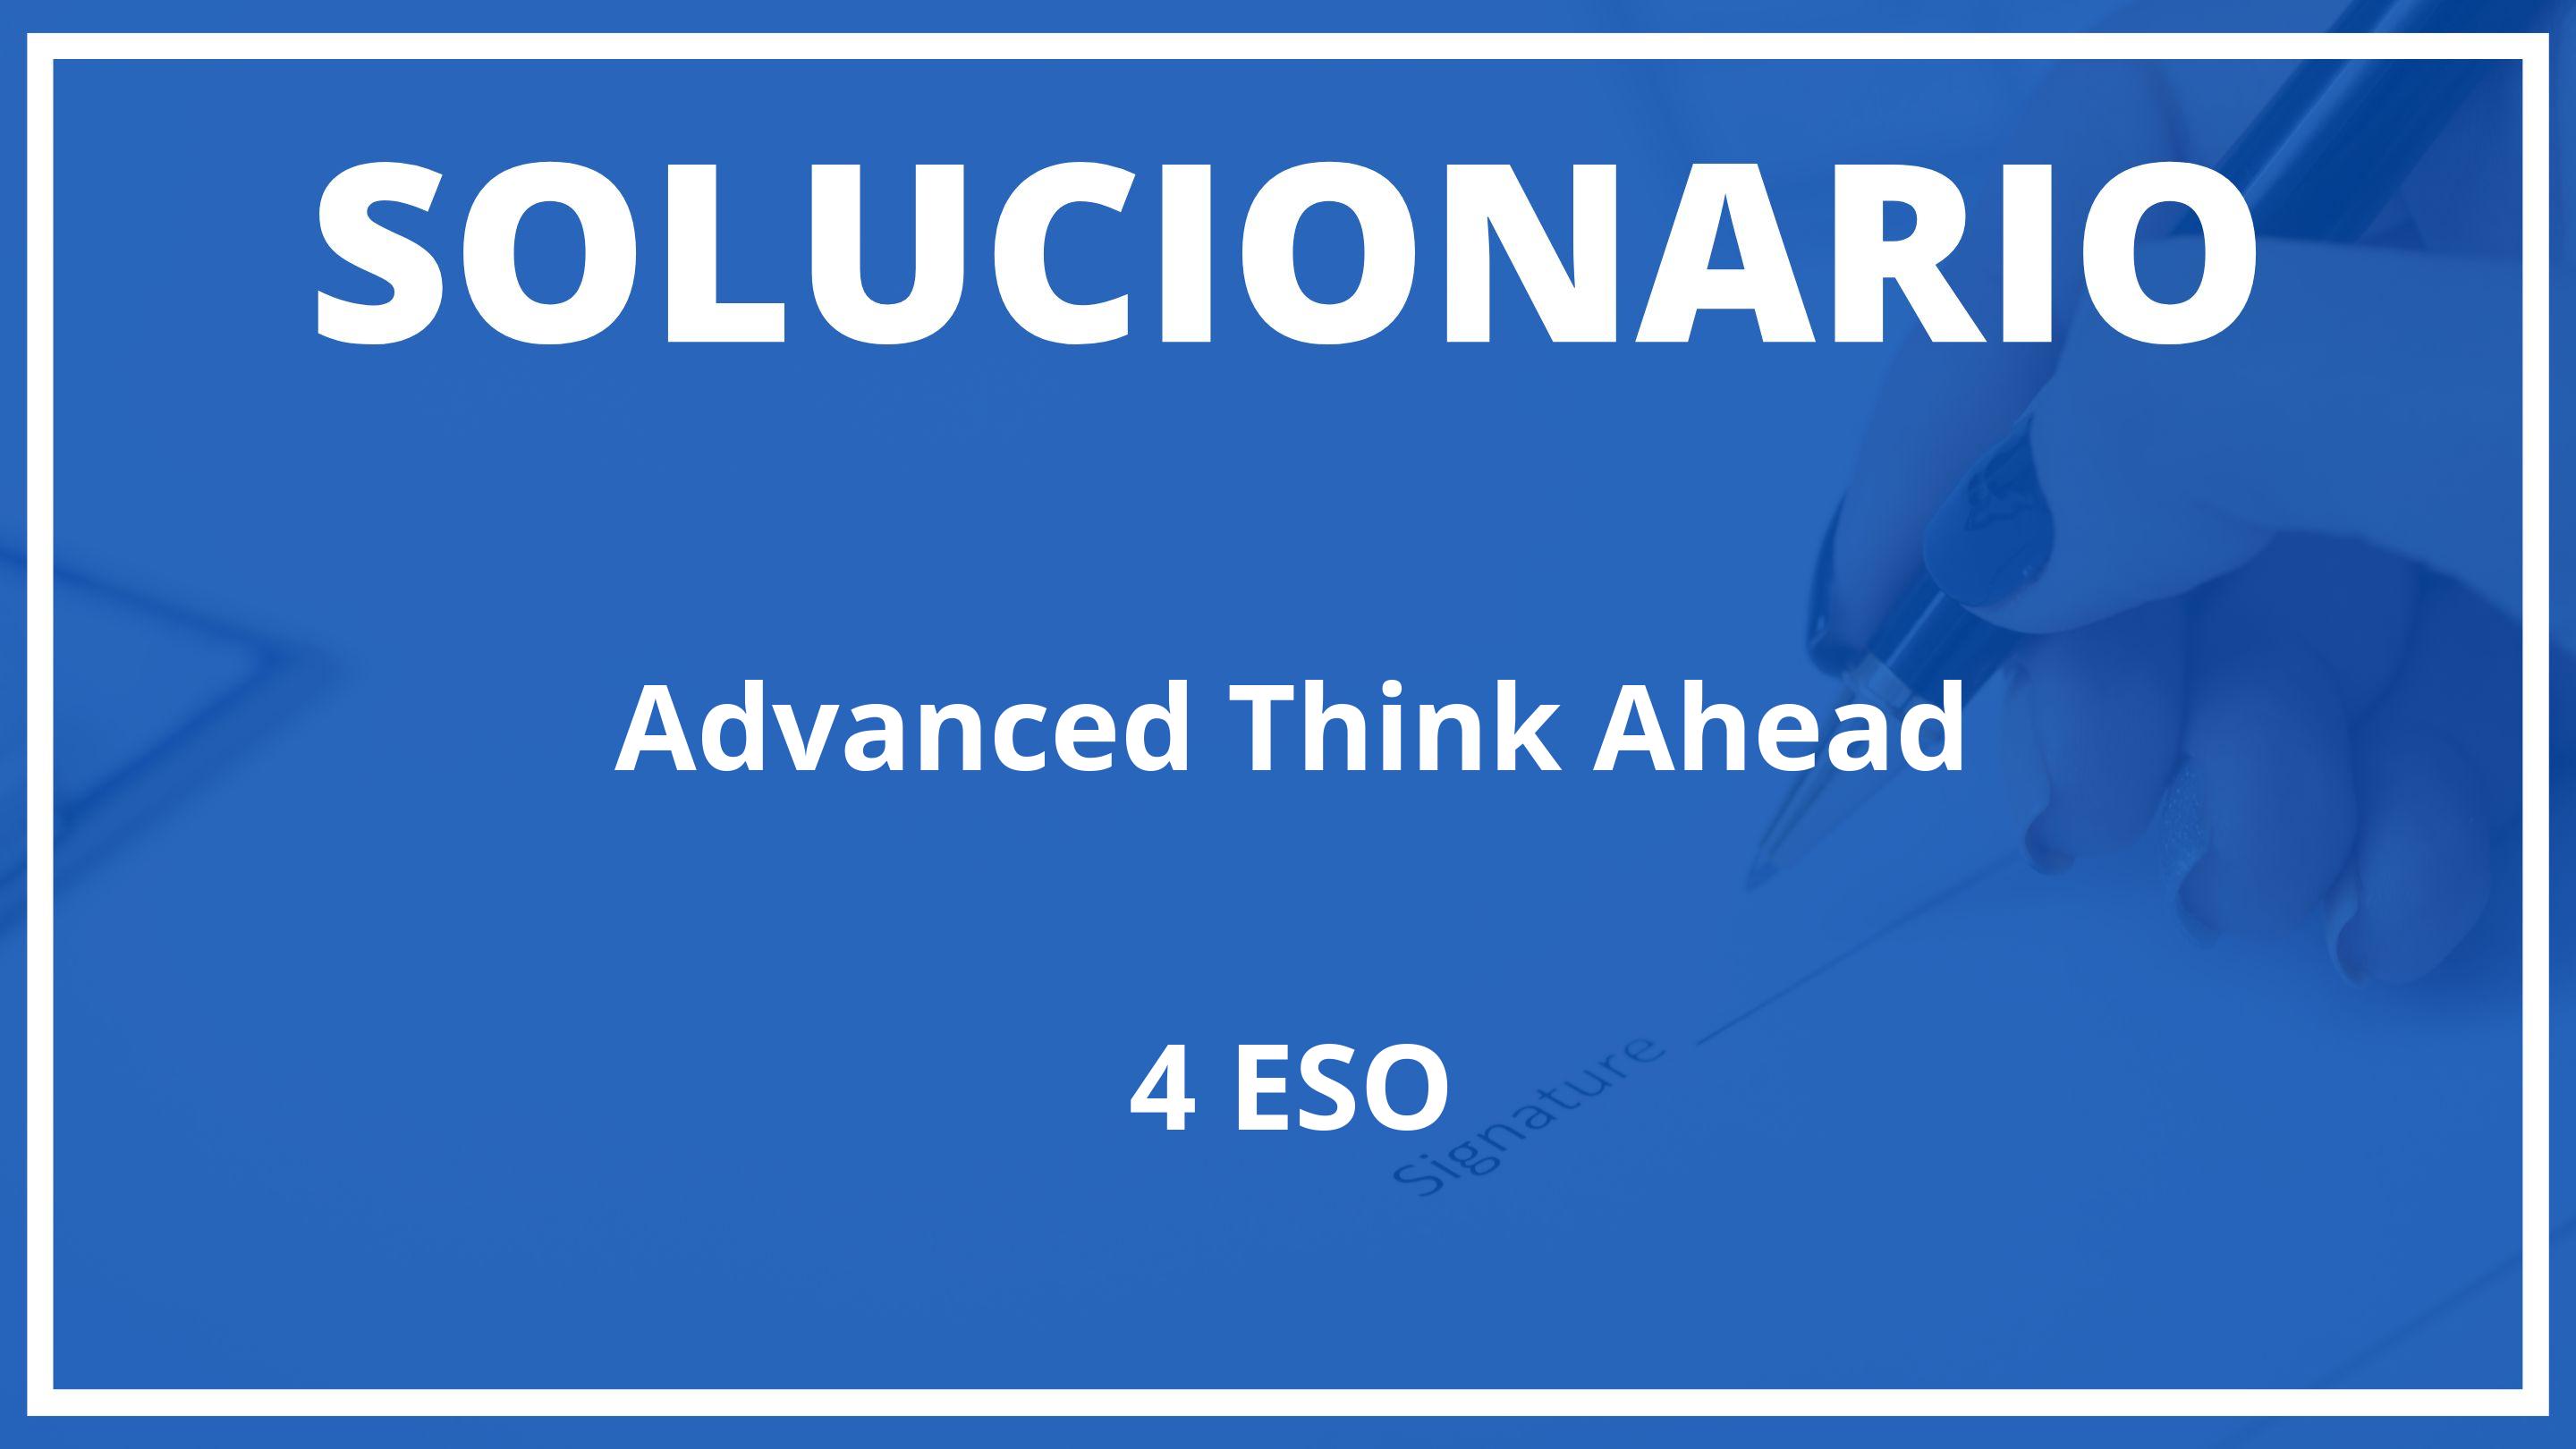 Solucionario Advanced Think Ahead Burlington Books 4 ESO